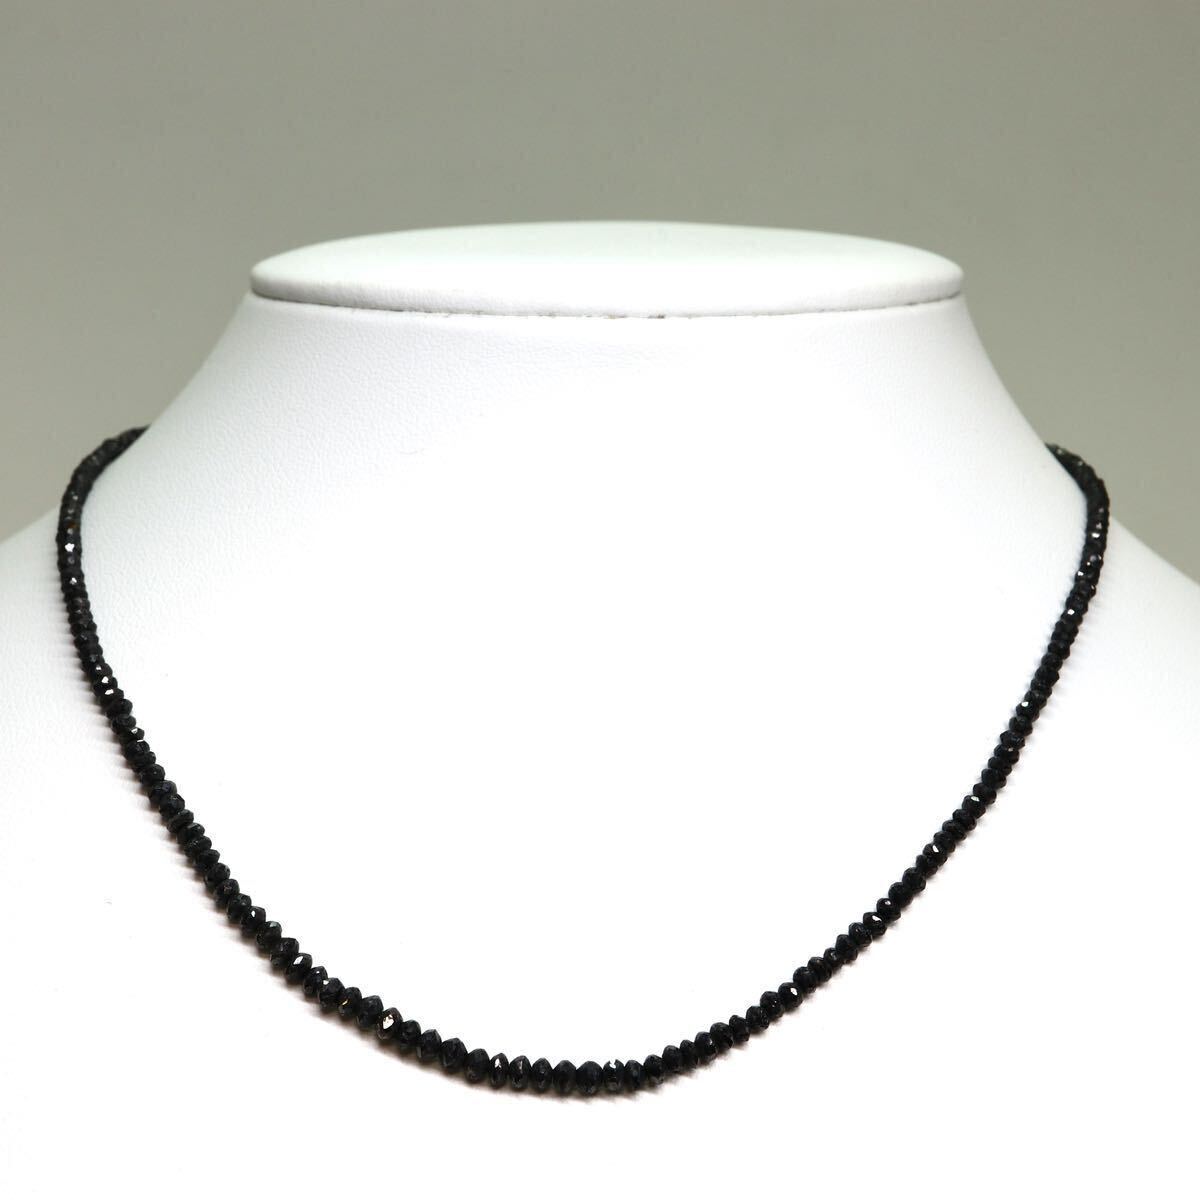 《K18WG 天然ブラックダイヤモンドネックレス》A 約4.9g 約44.5cm necklace black diamond ジュエリー jewelry DI0/EA0の画像2